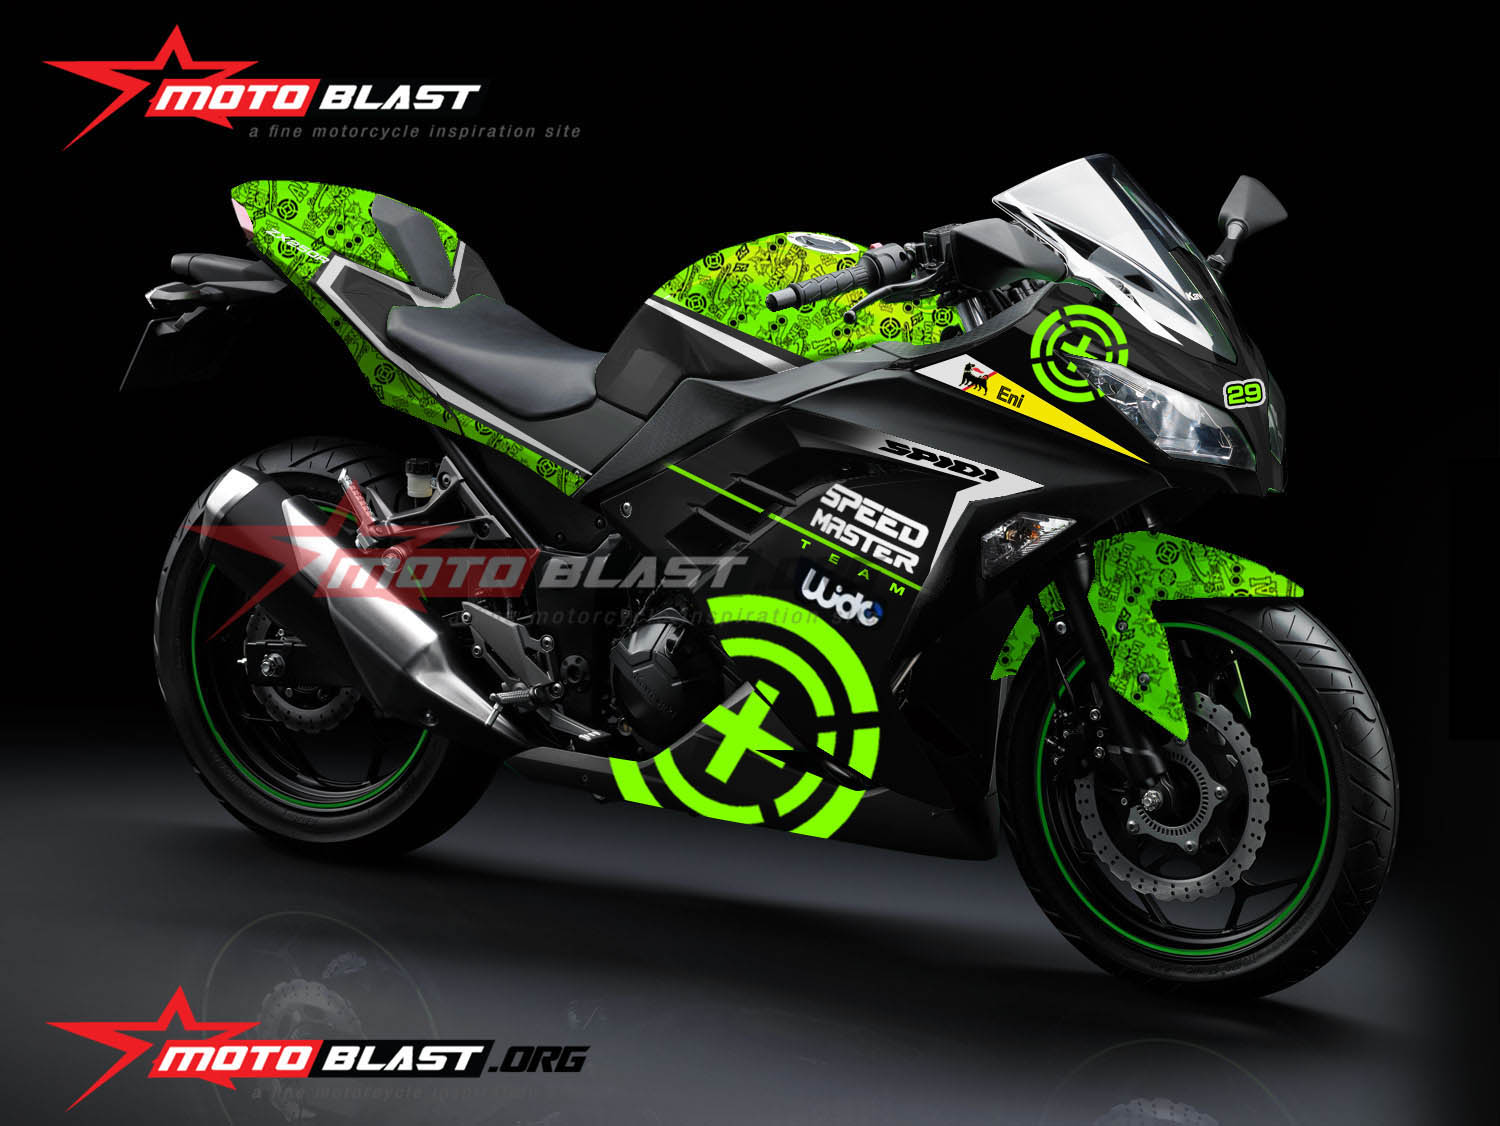 Modif Striping Kawasaki Ninja RR Mono Andrea Iannone Theme